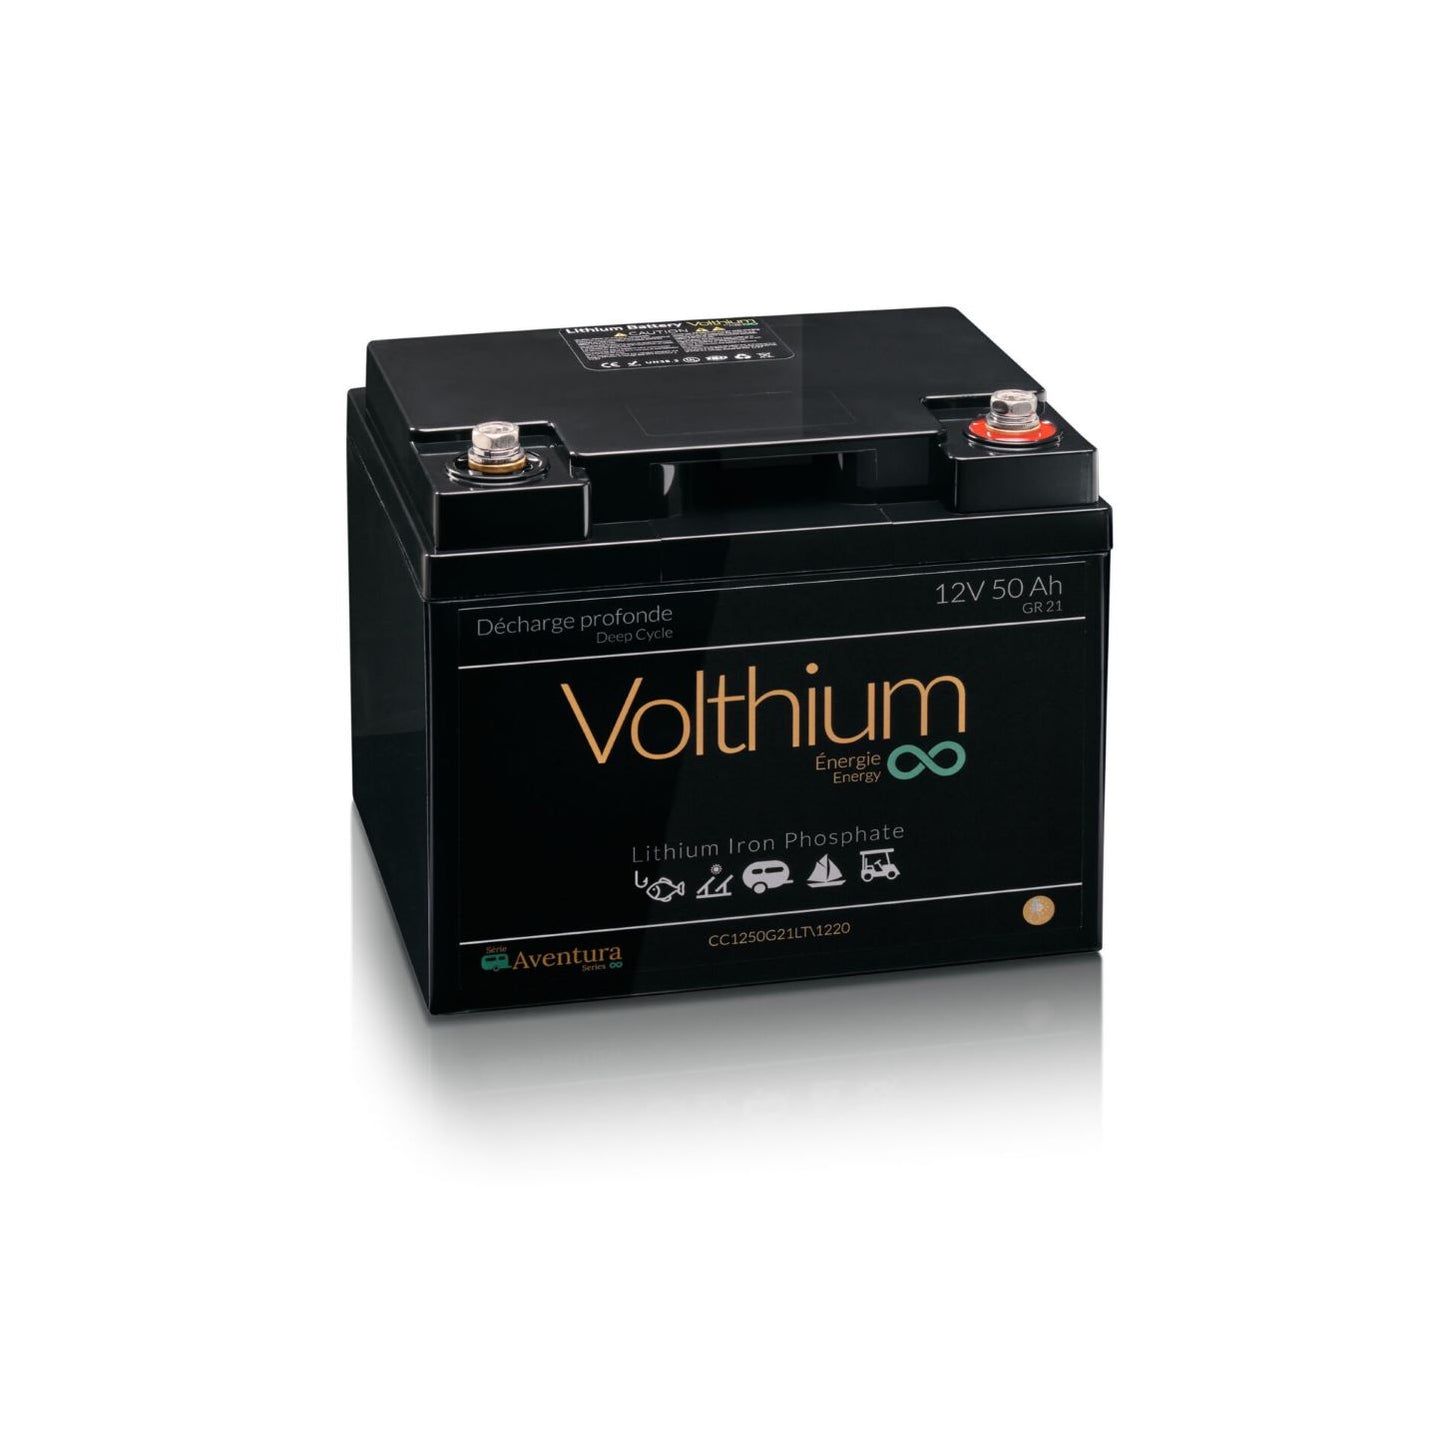 Volthium 12.8V 50Ah Lithium Iron Phosphate Battery